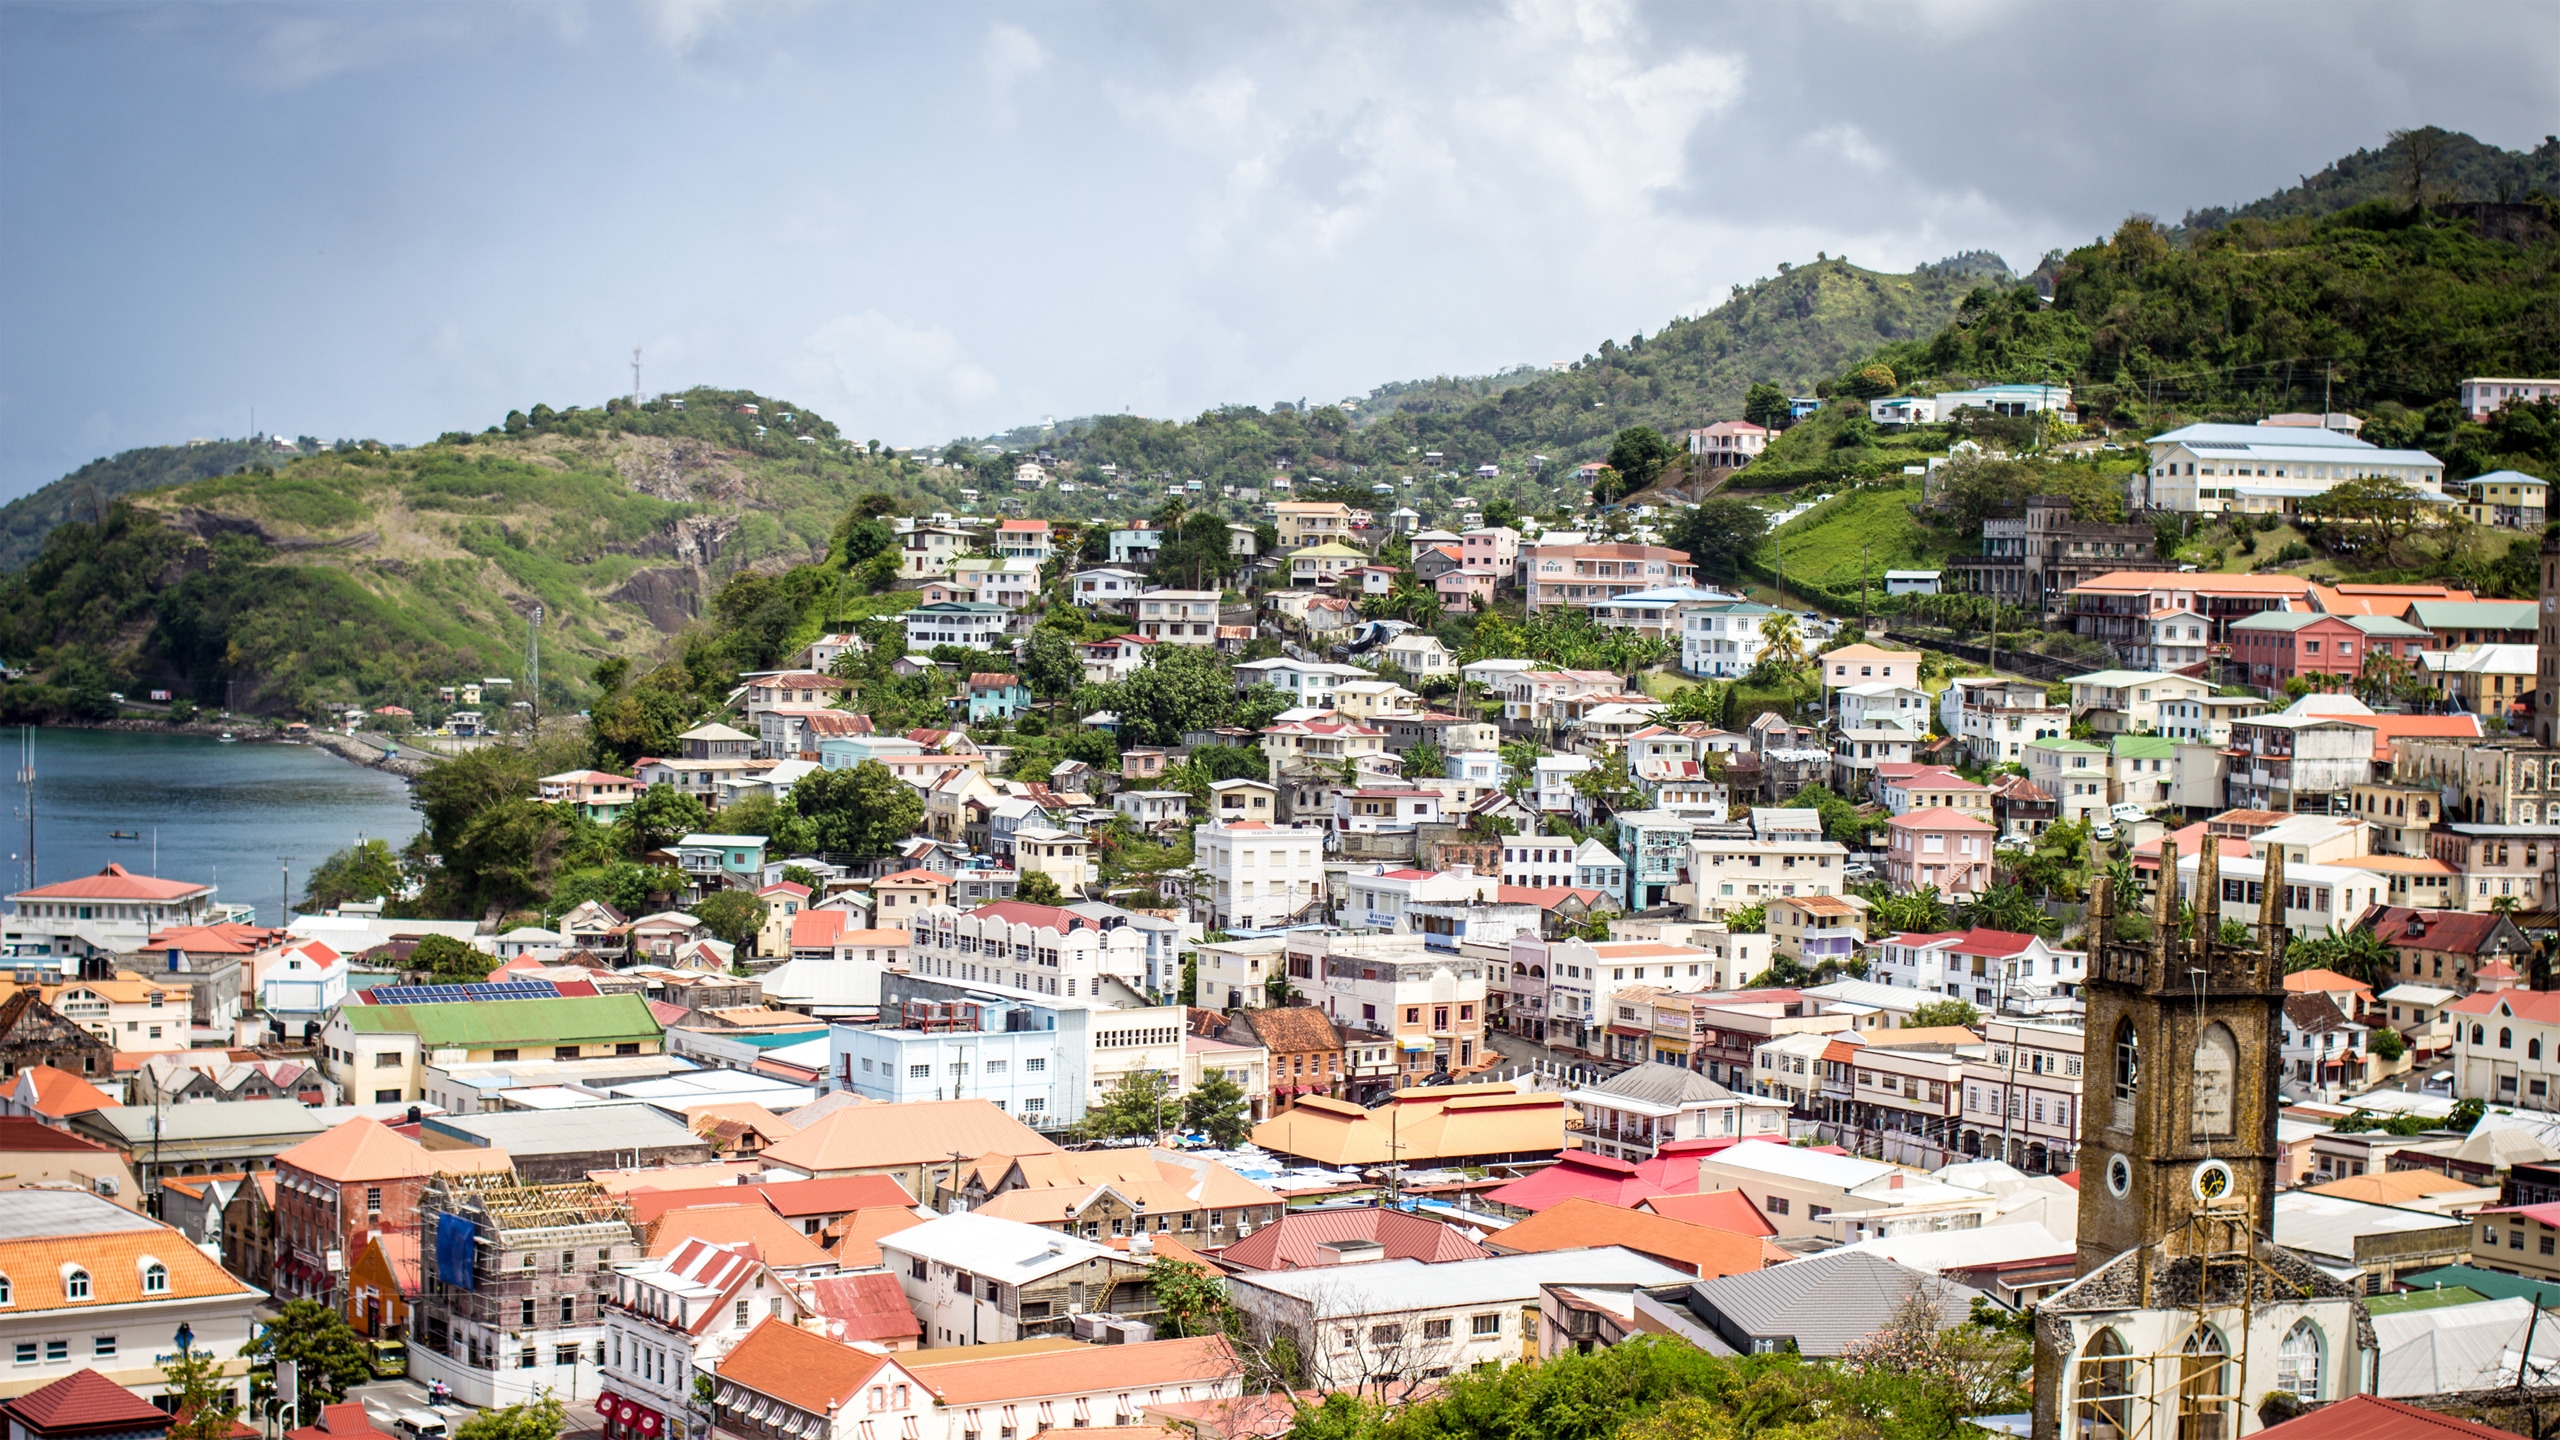 A Grenadian Village for 2560x1440 HDTV resolution